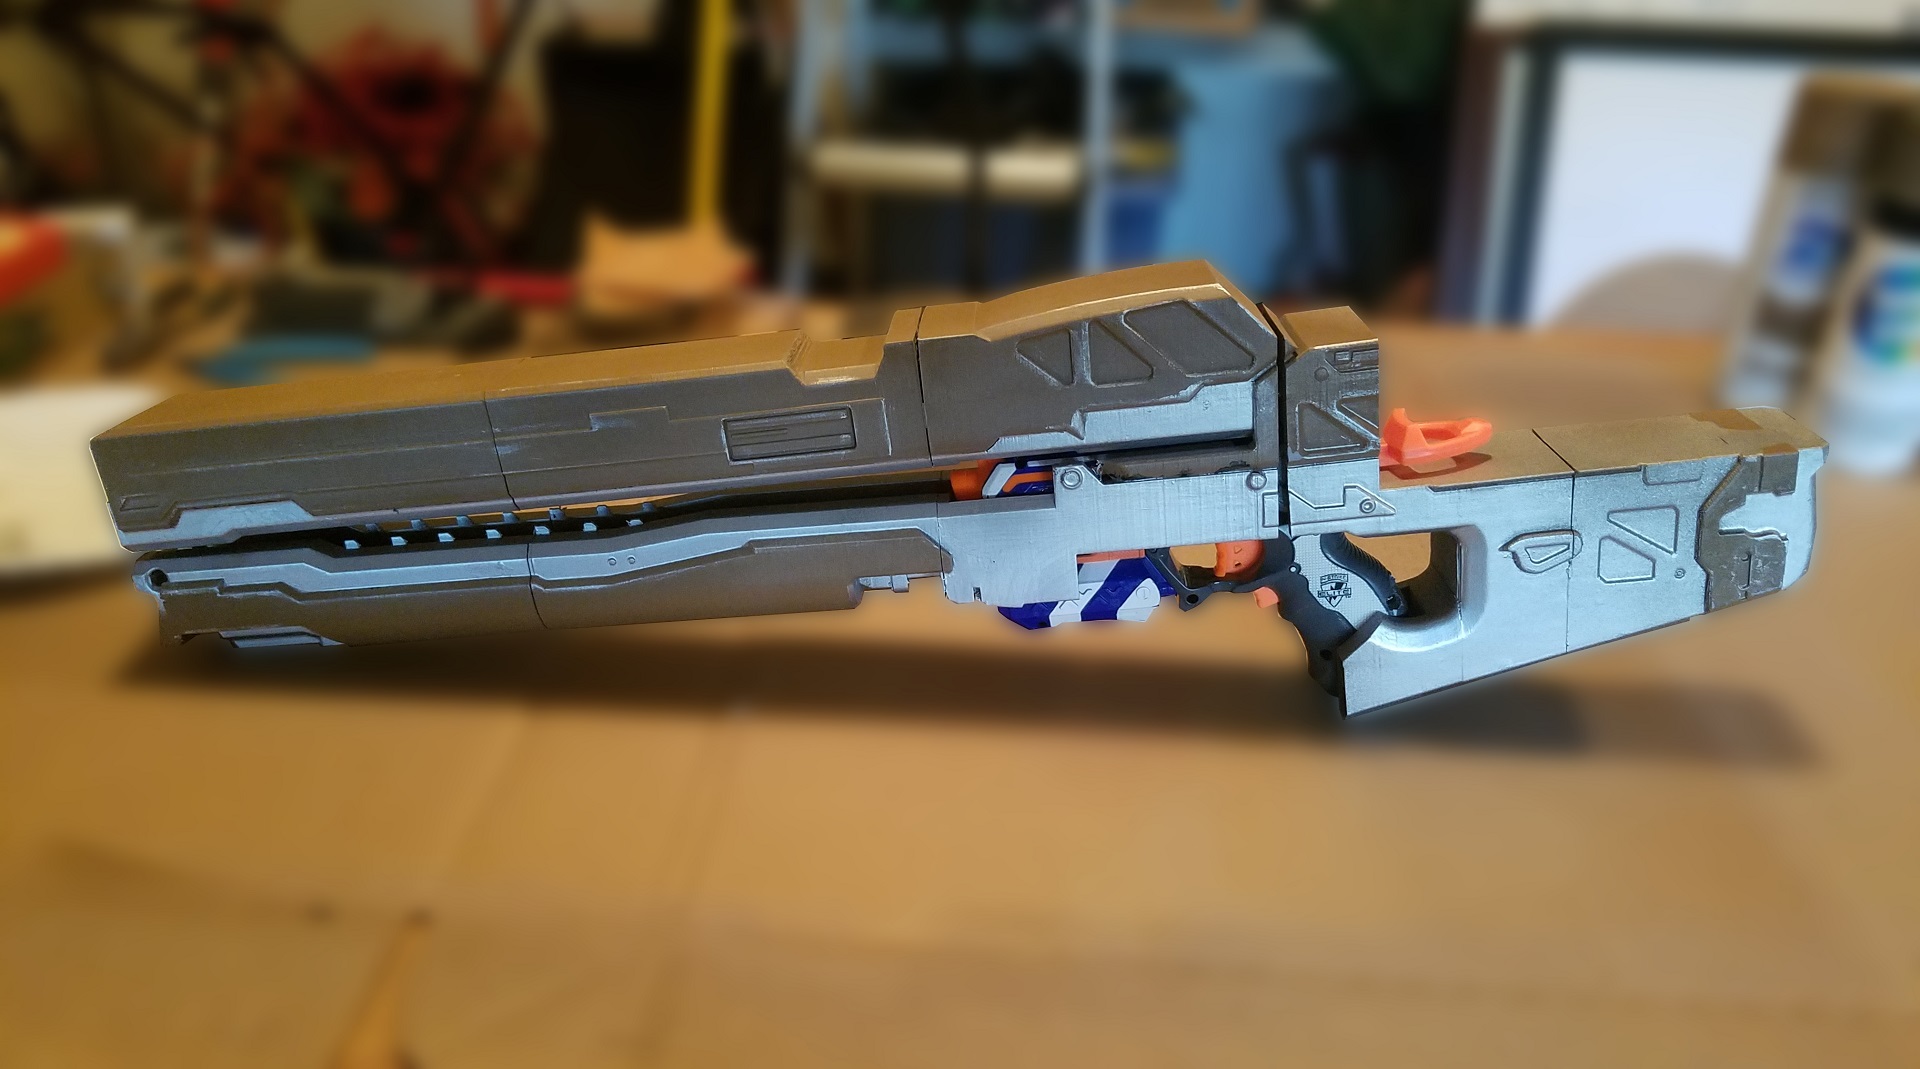 3D Print turns a small Nerf gun into the Halo 5 railgun - htxt.africa. 